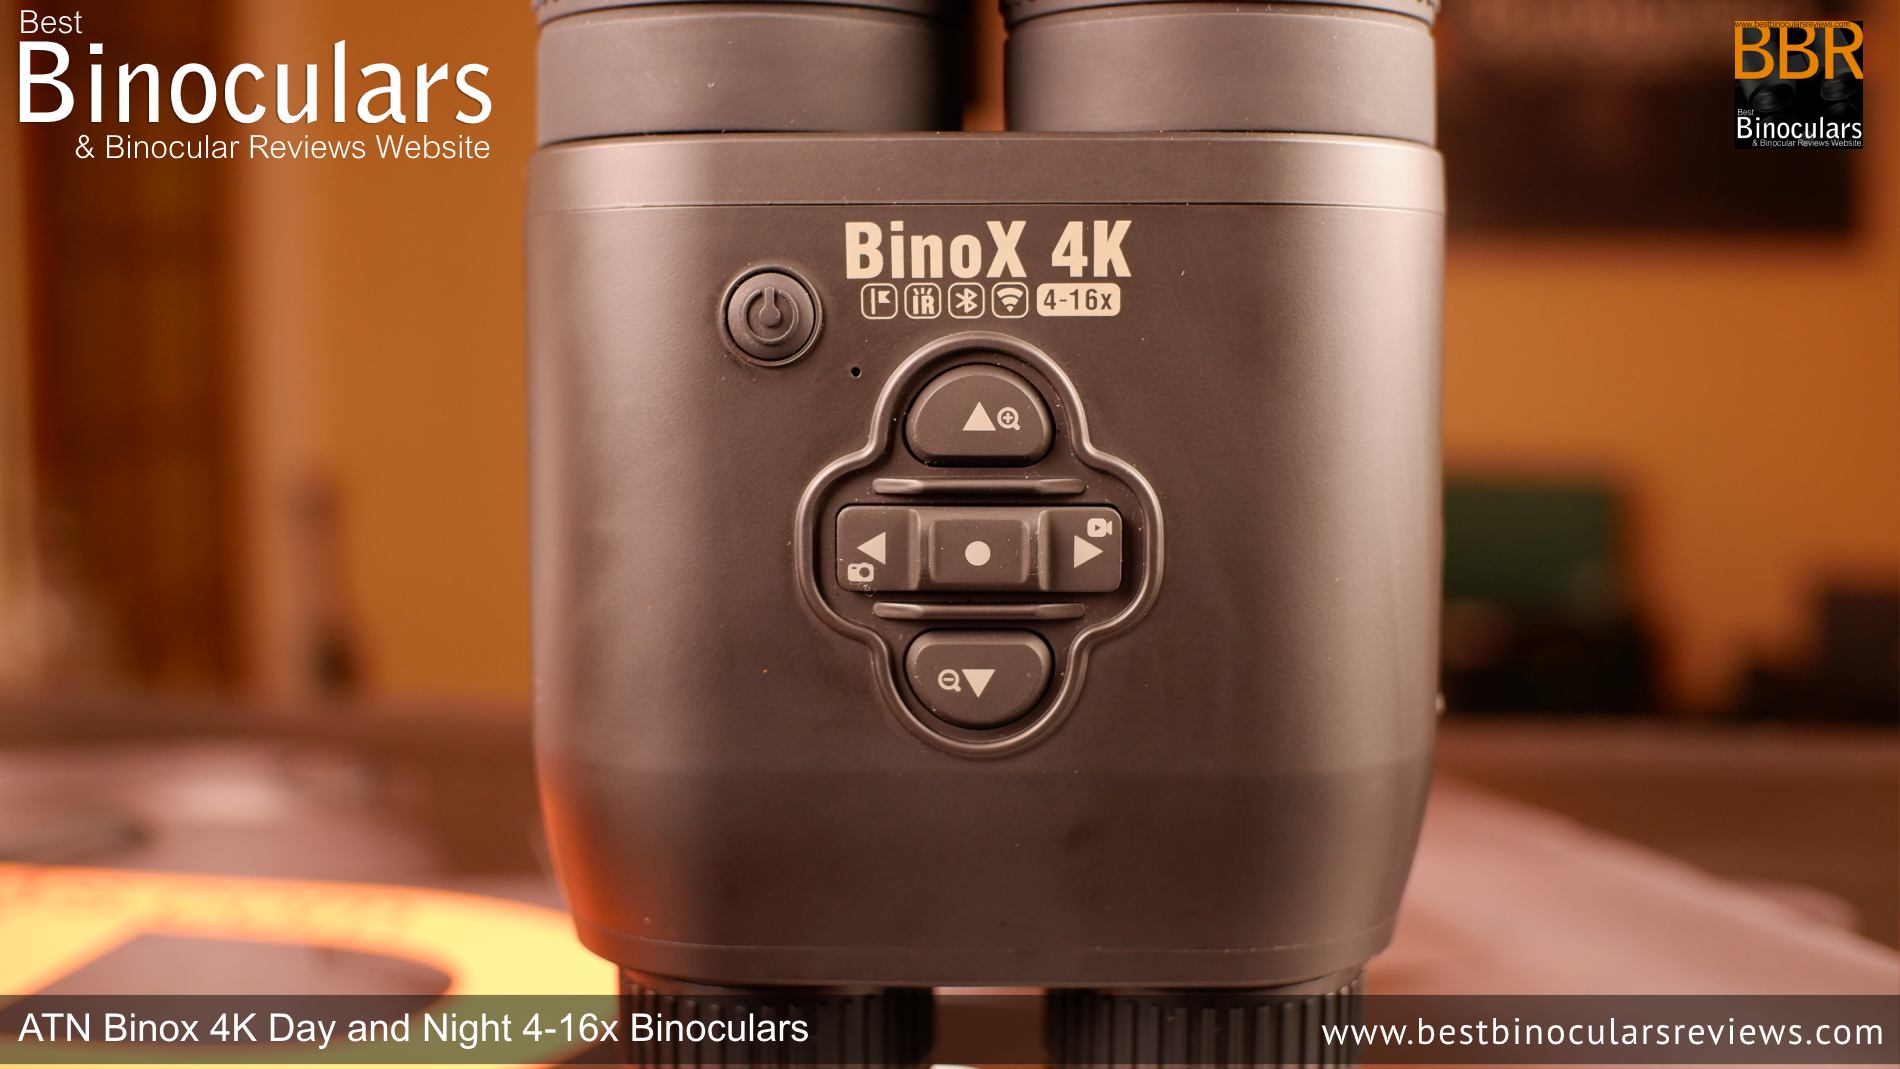 Close-up View of the Keypad on the ATN Binox 4K Day and Night 4-16x Binoculars